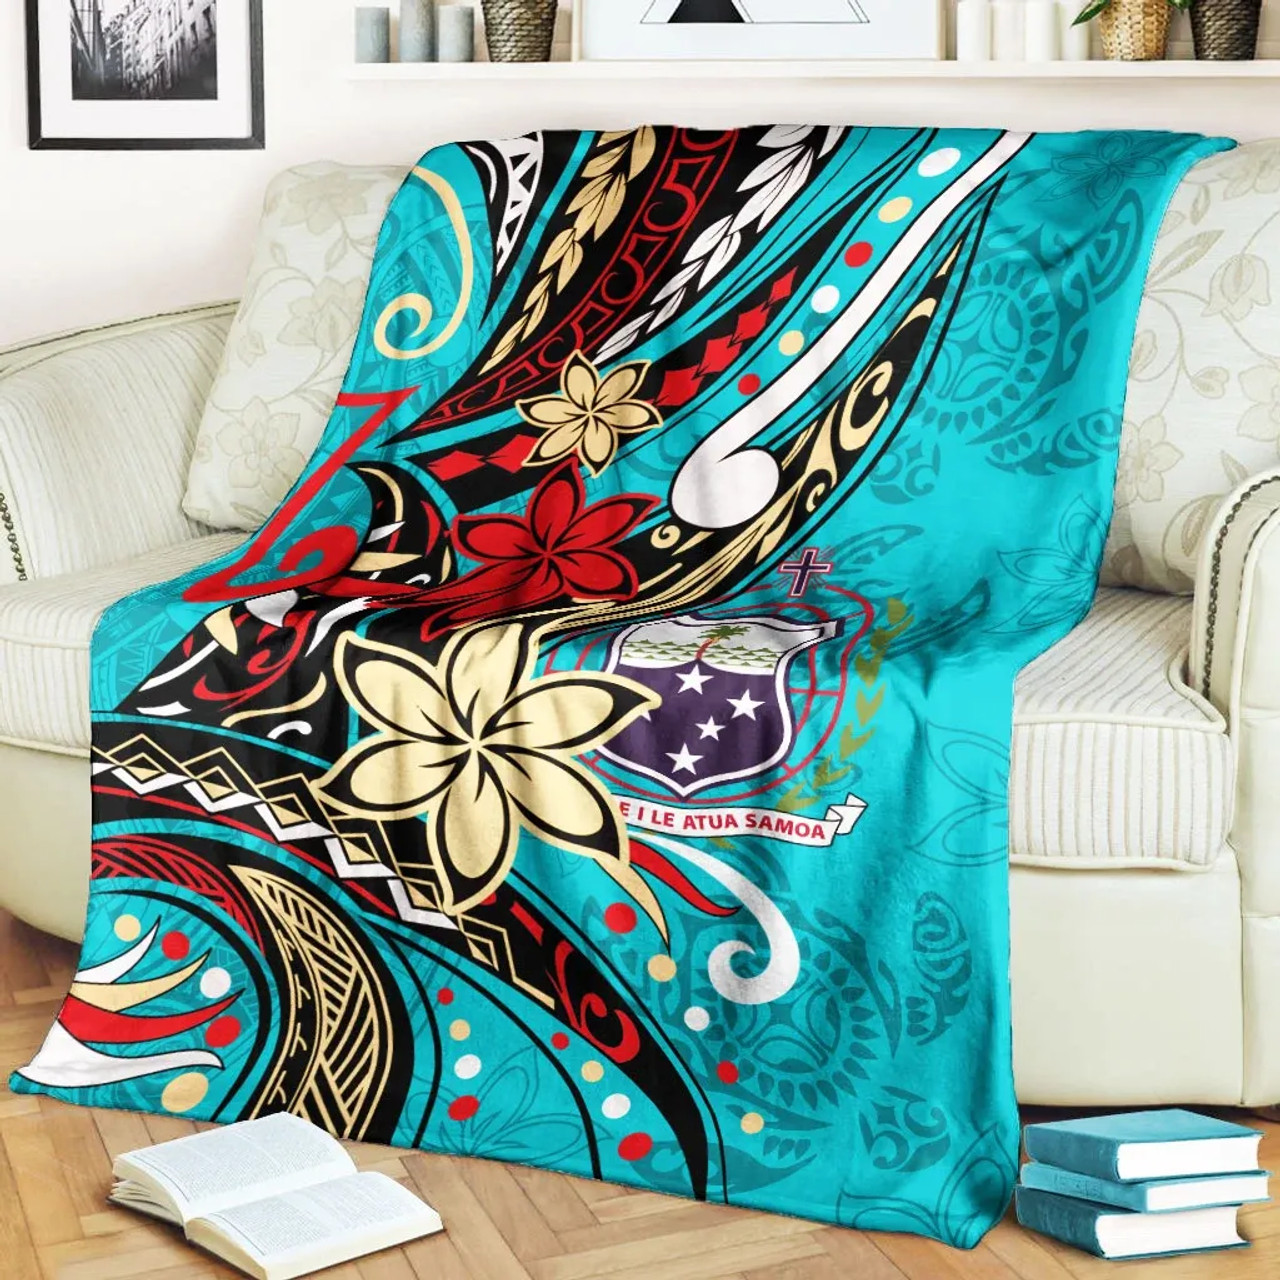 Samoa Premium Blanket - Tribal Flower With Special Turtles Blue Color 2